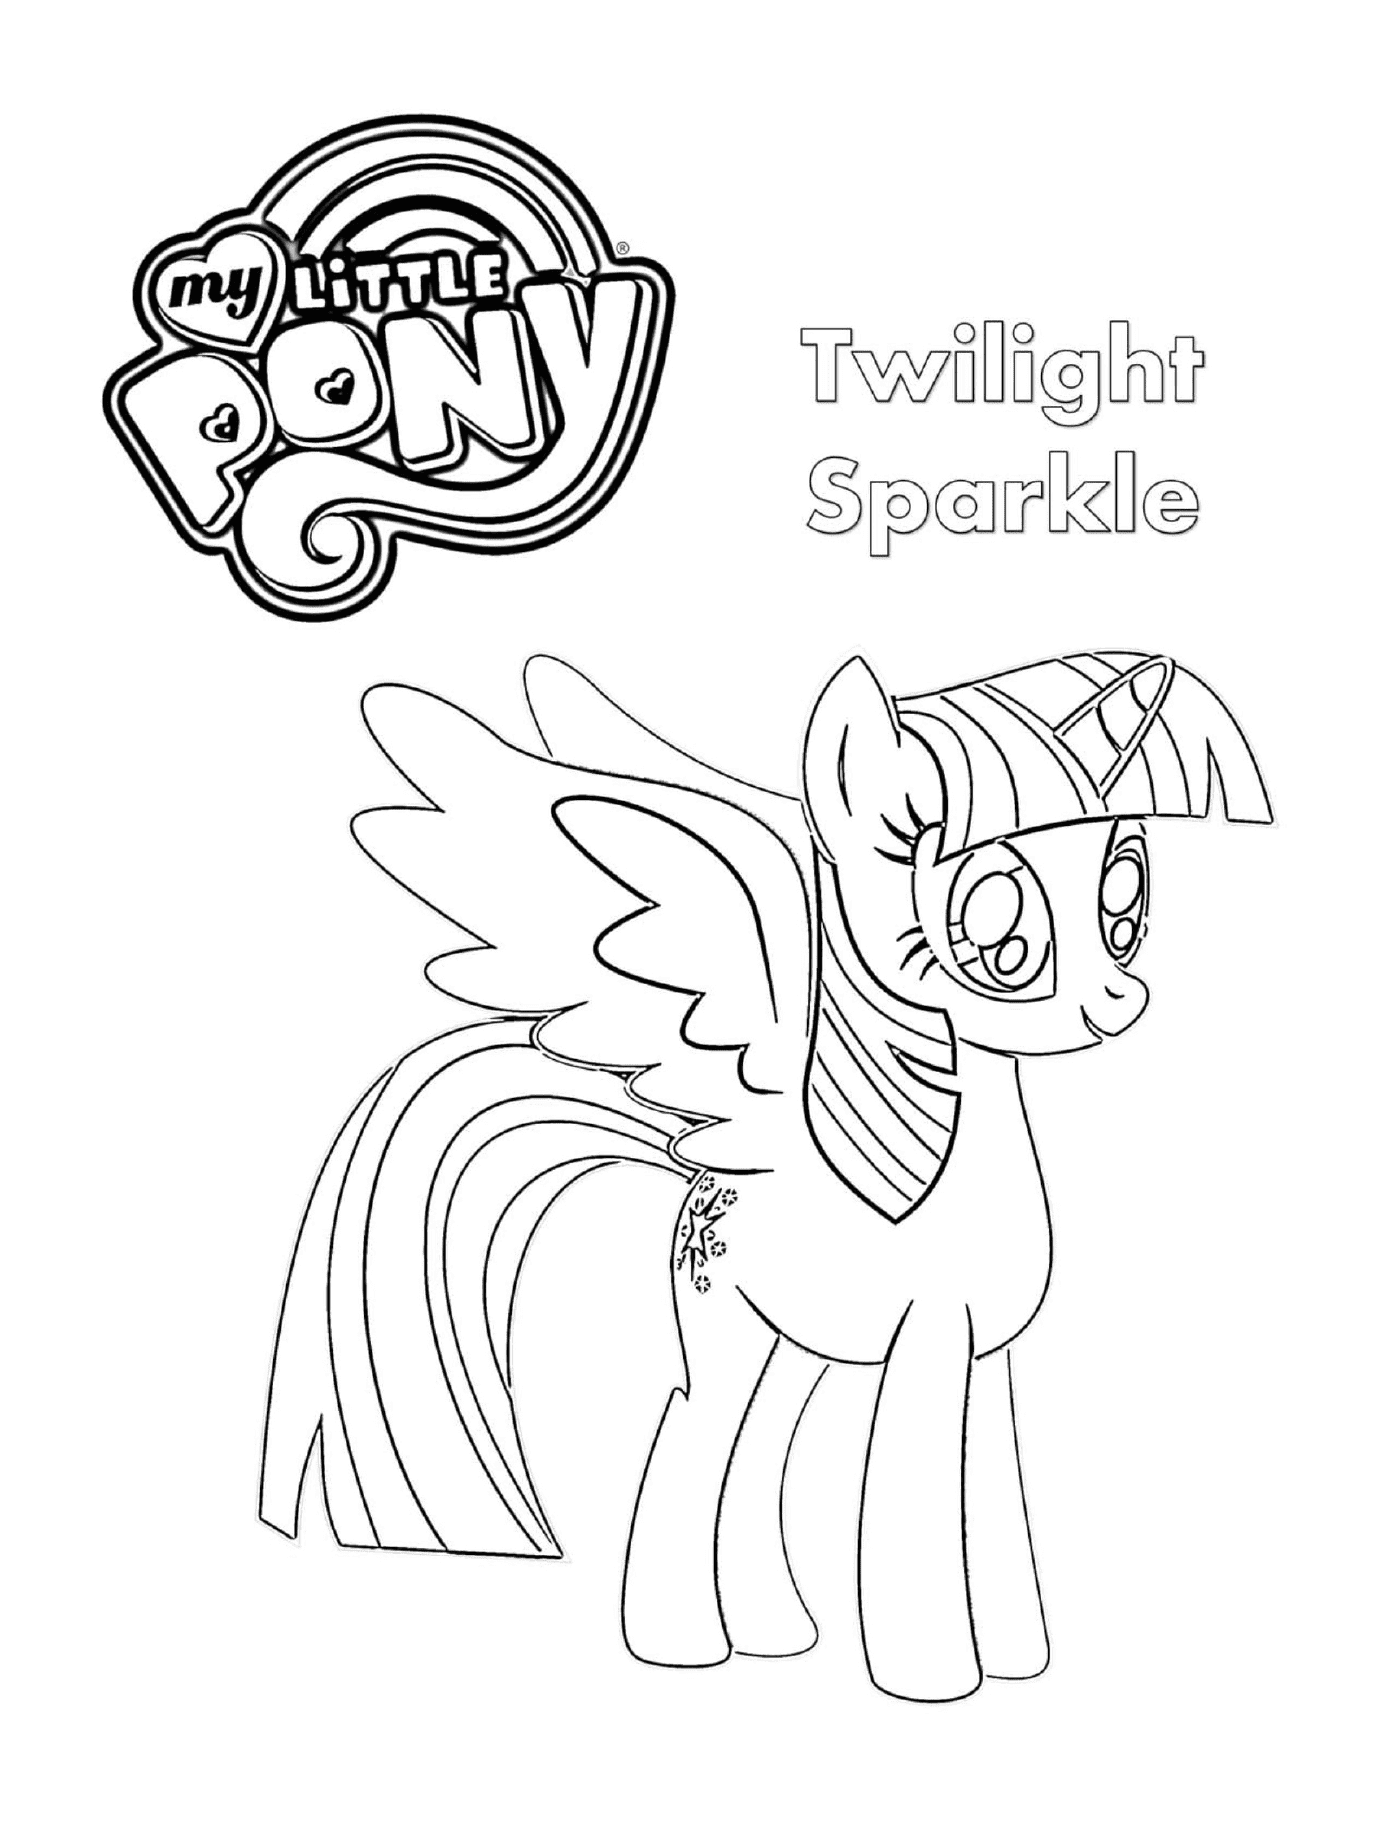  Twilight Sparkle, il pony disegnato 